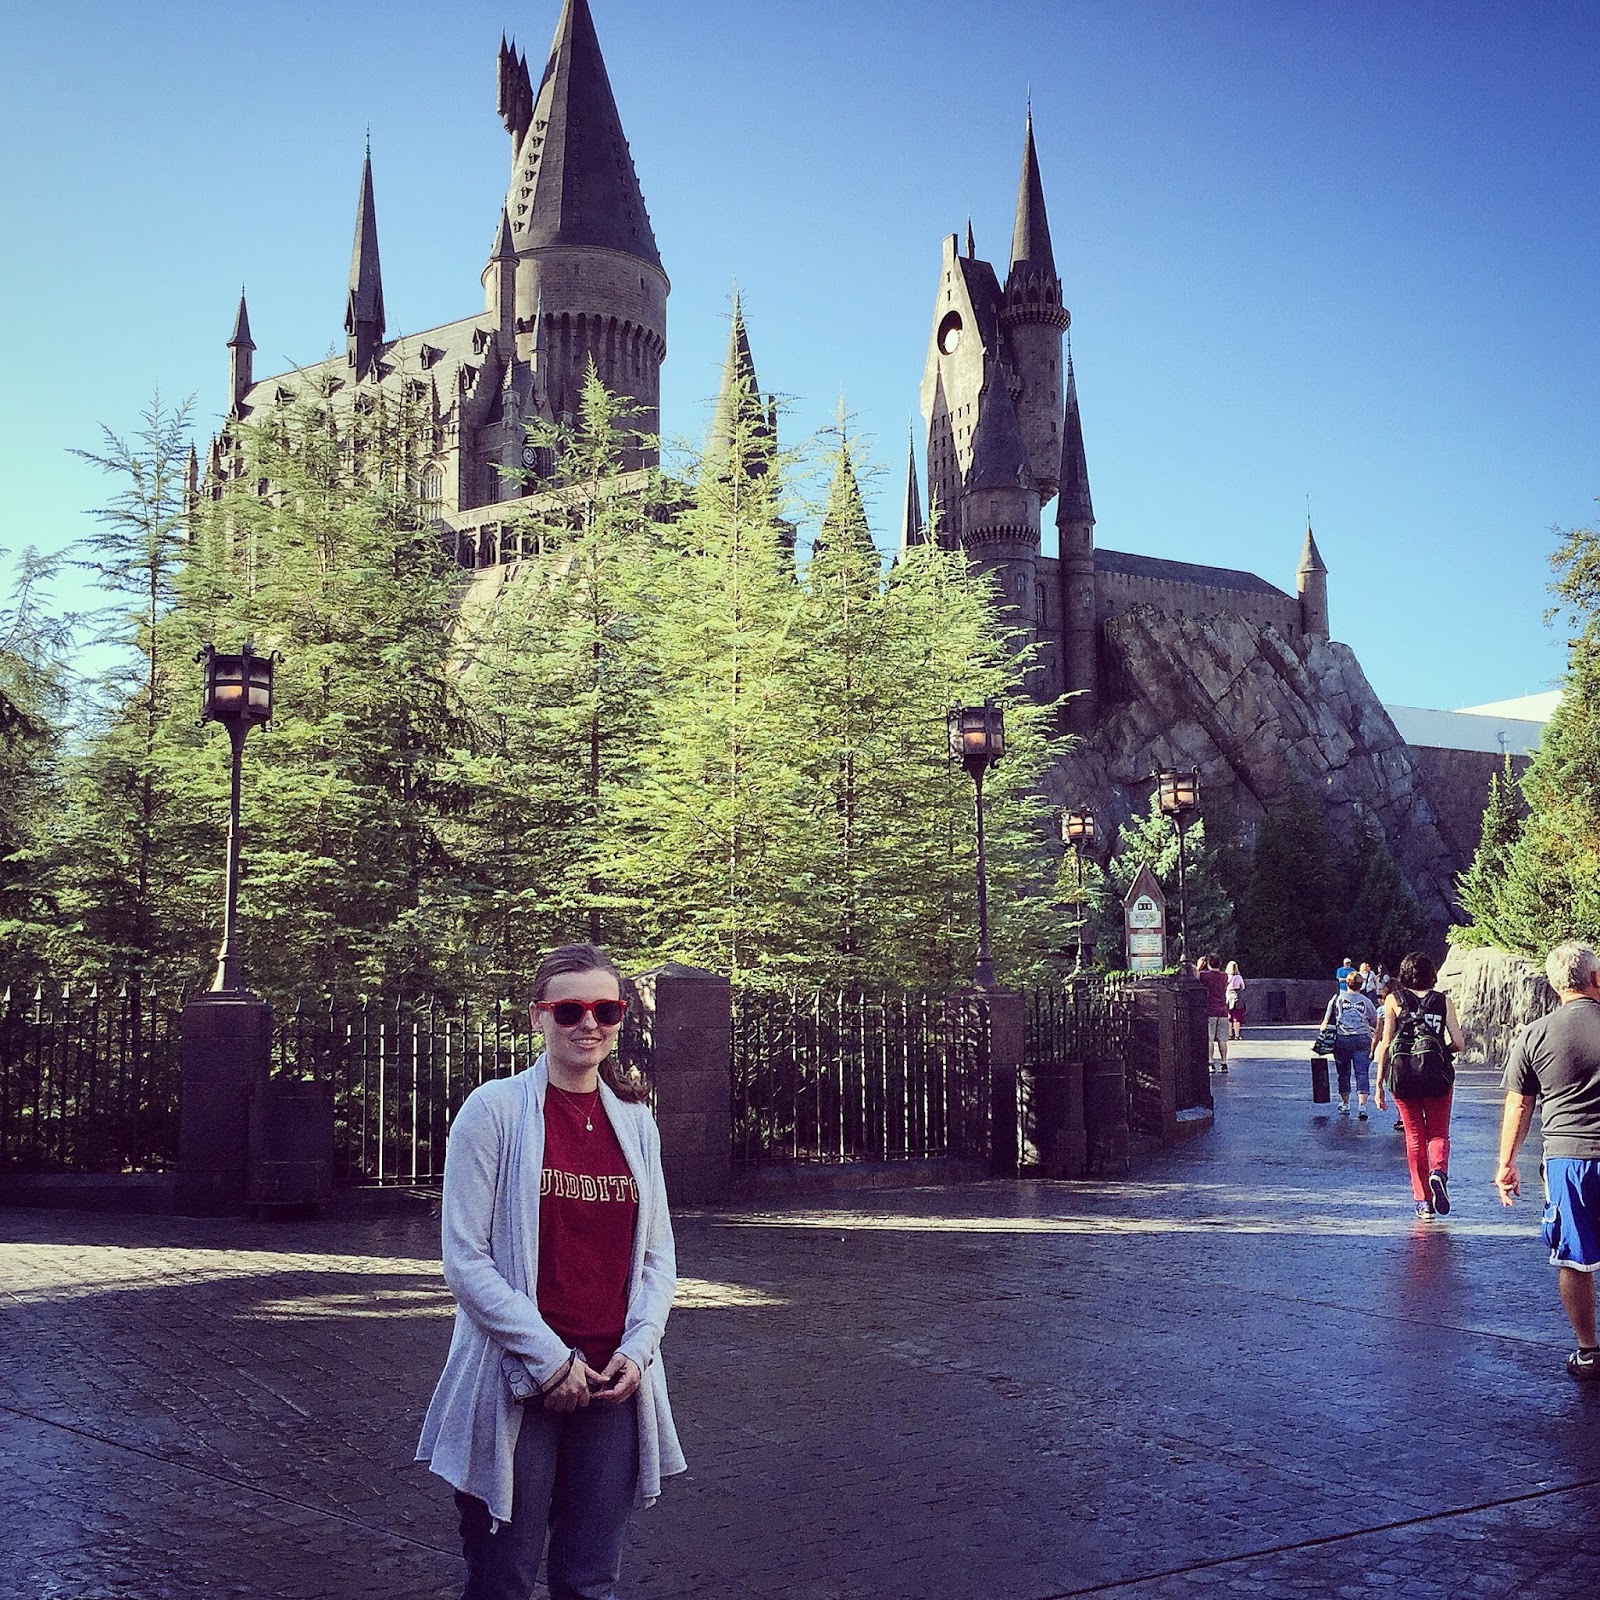 designersmirage: Fast Pass Hotels Harry Potter Orlando